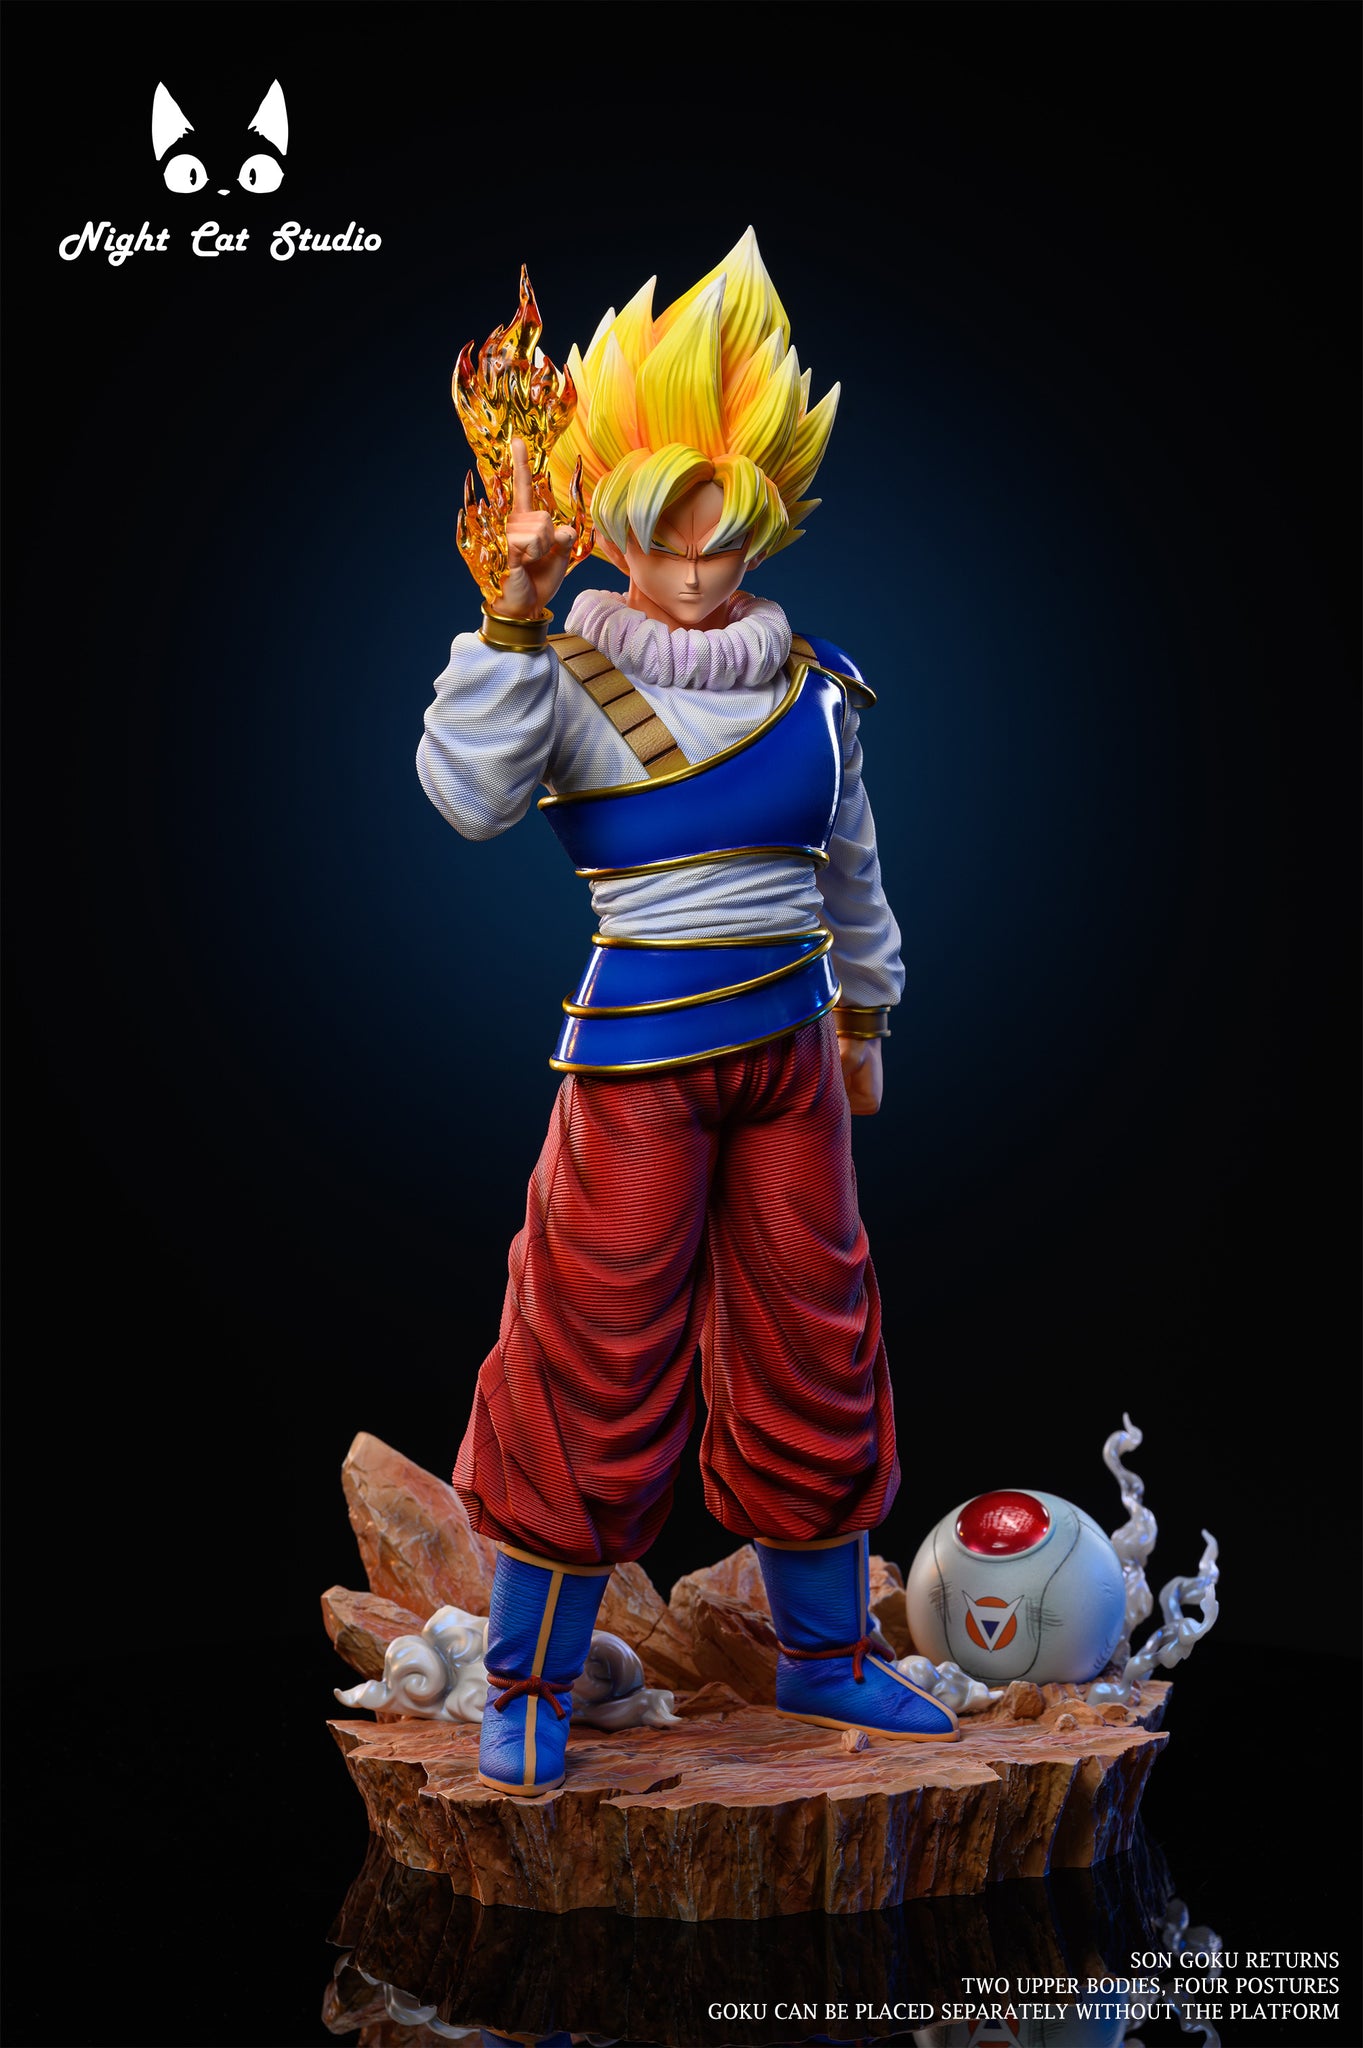 Dragon Ball Break Studio Son Goku Resin Statue - Preorder